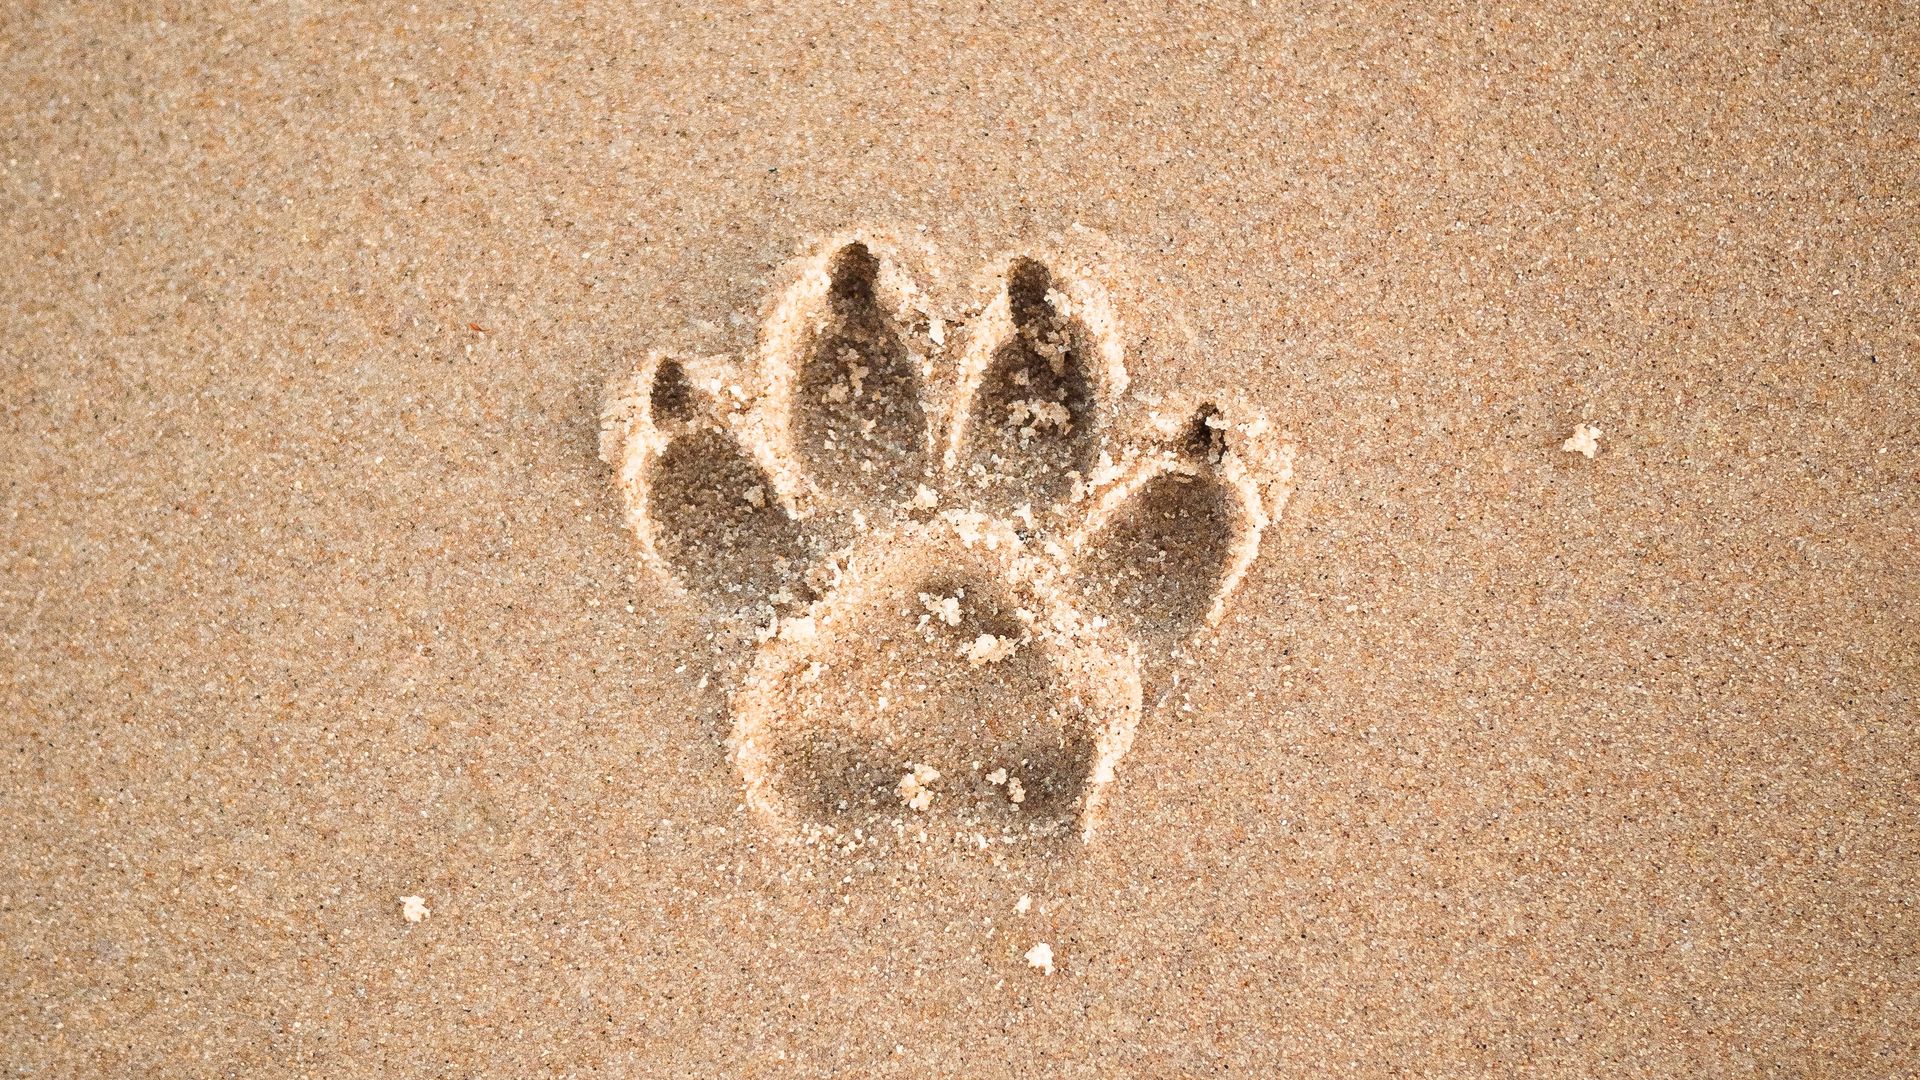 Следы собаки на песке